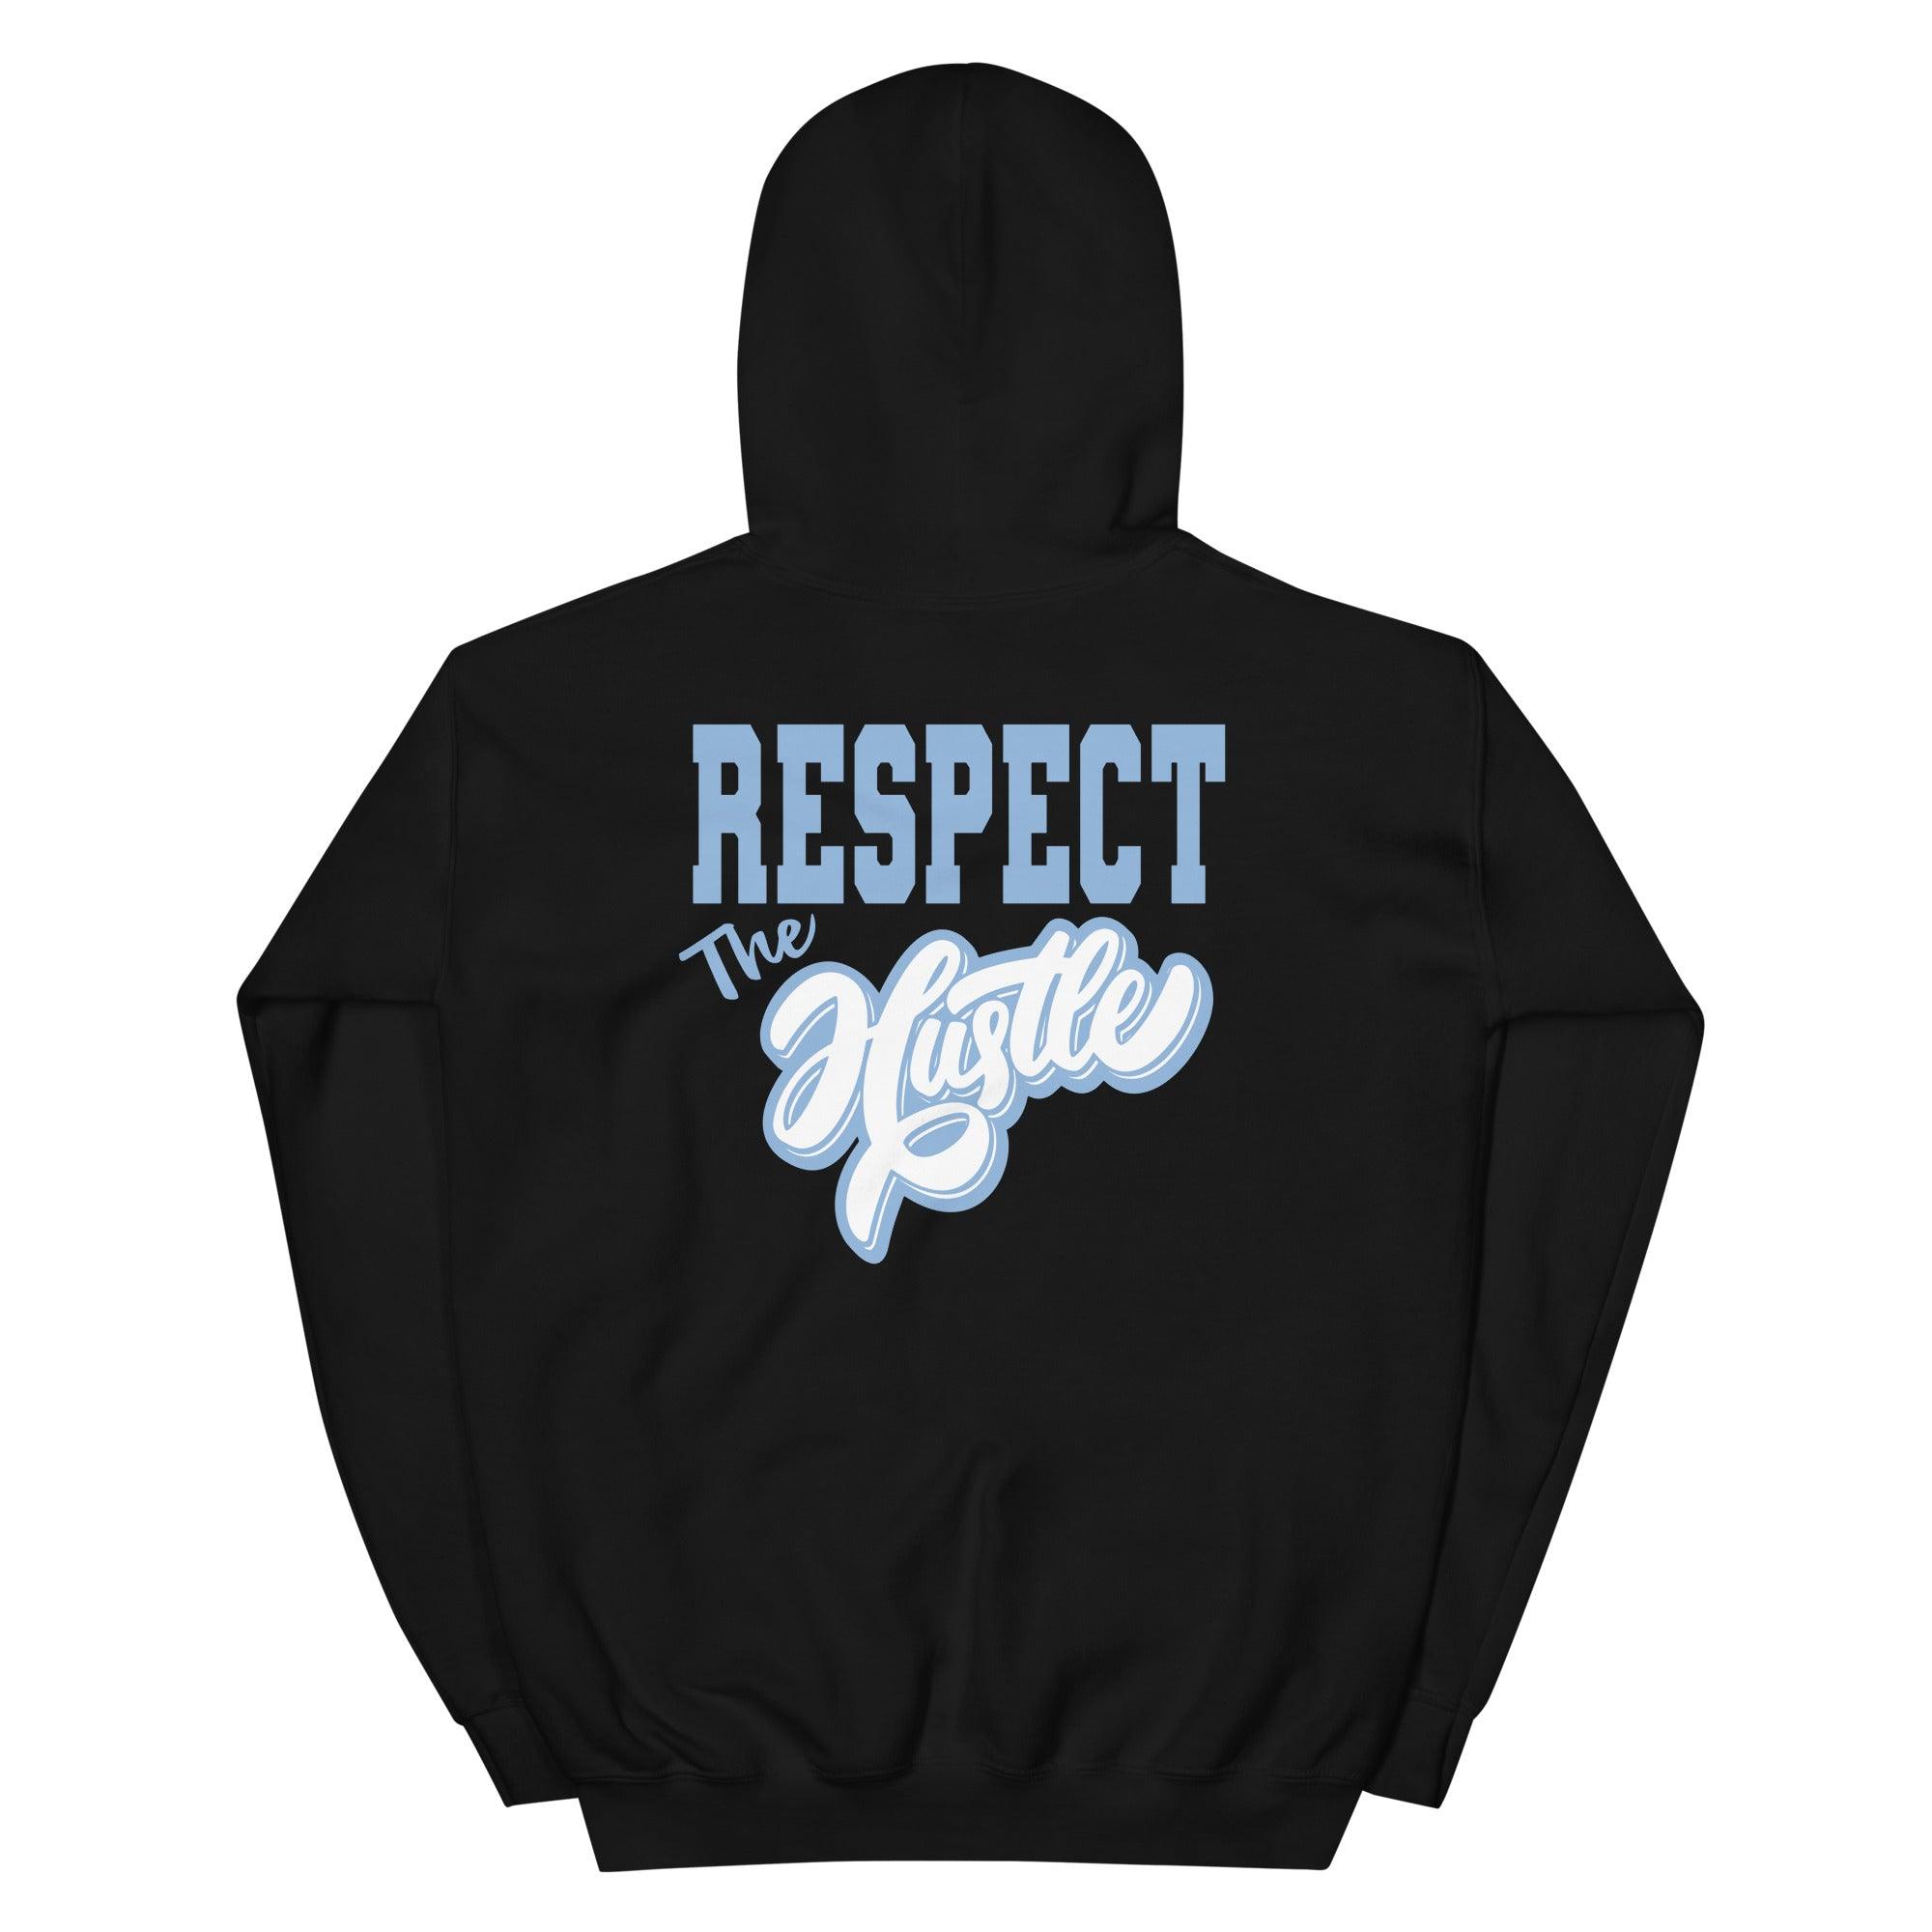 Respect The Hustle Sneaker Sweatshirt AJ 6s Retro GG Still Blue photo